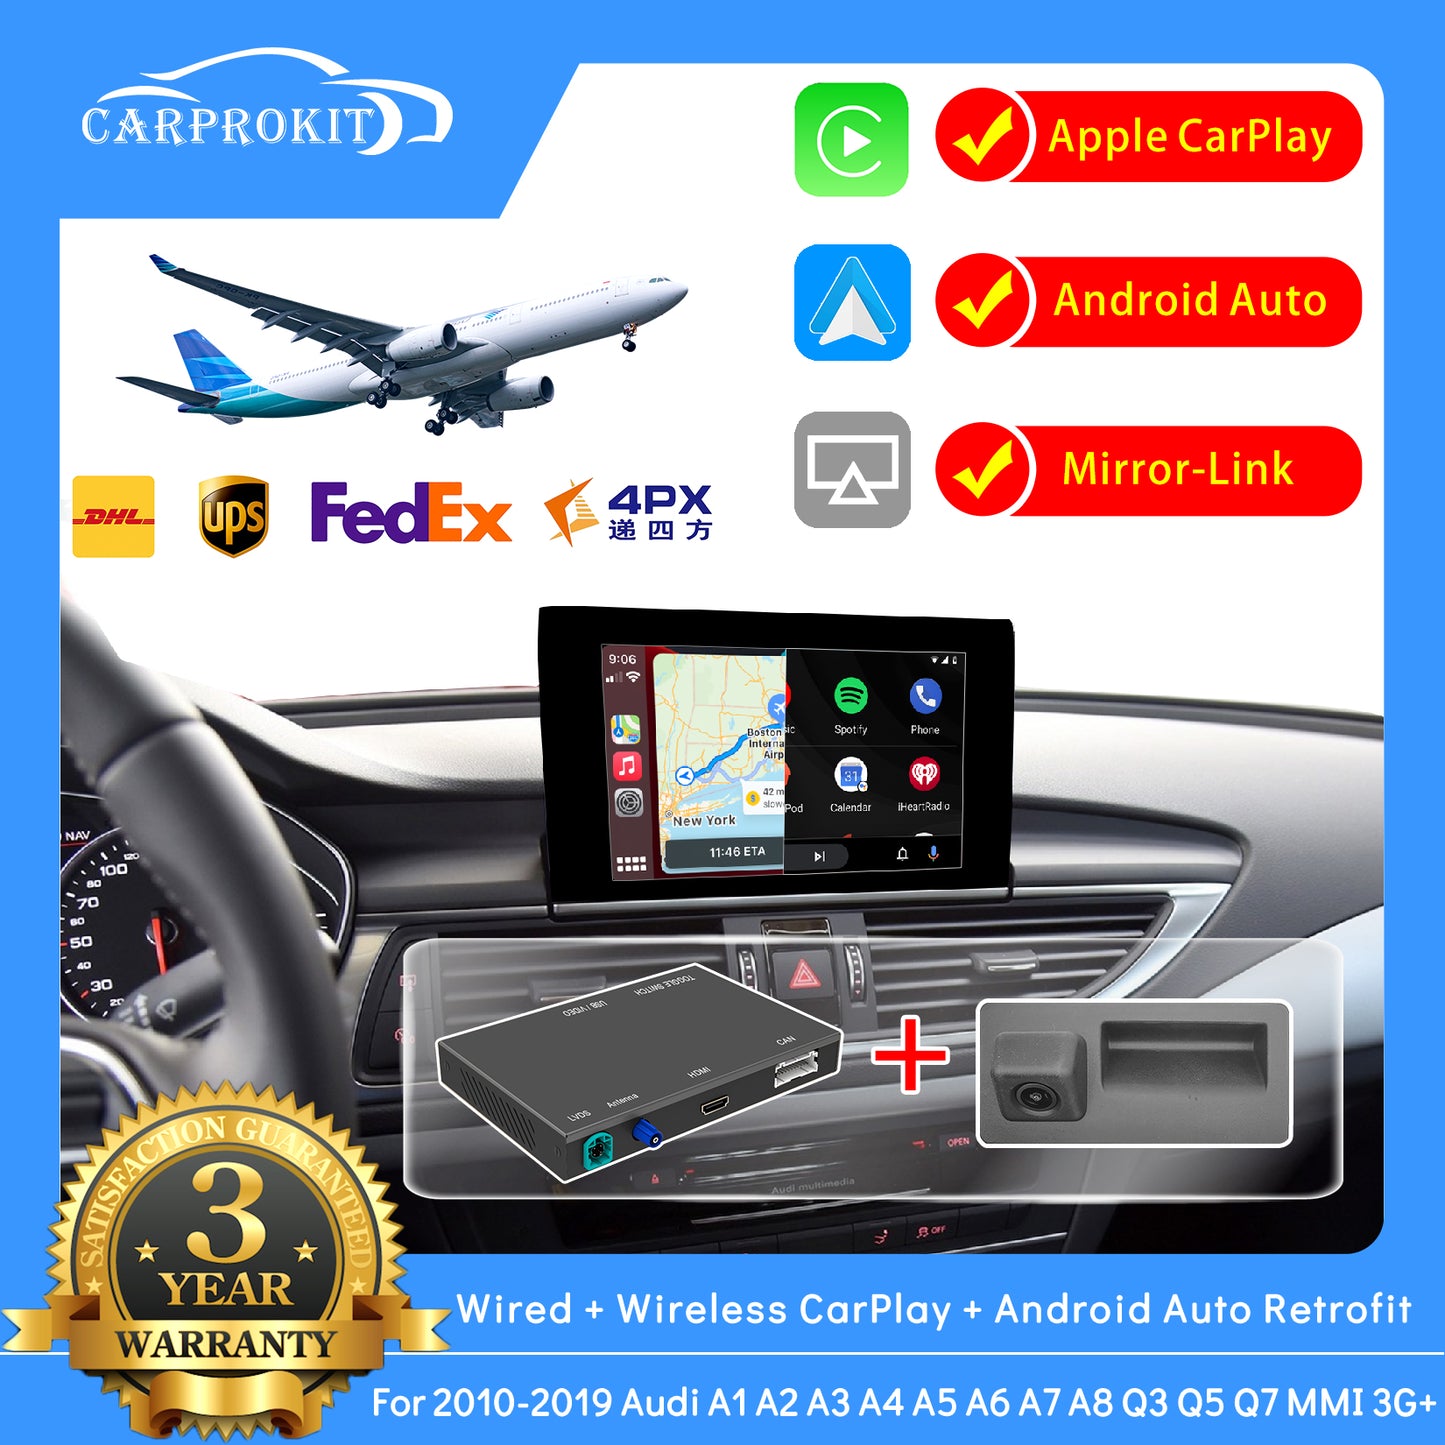 CarProKit Wireless CarPlay Android Auto Mirroring Retrofit Kits + AMI Cable + Reverse Camera for Audi A3 A4 A5 A6 A7 A8 Q3 Q5 Q7 2010-2019